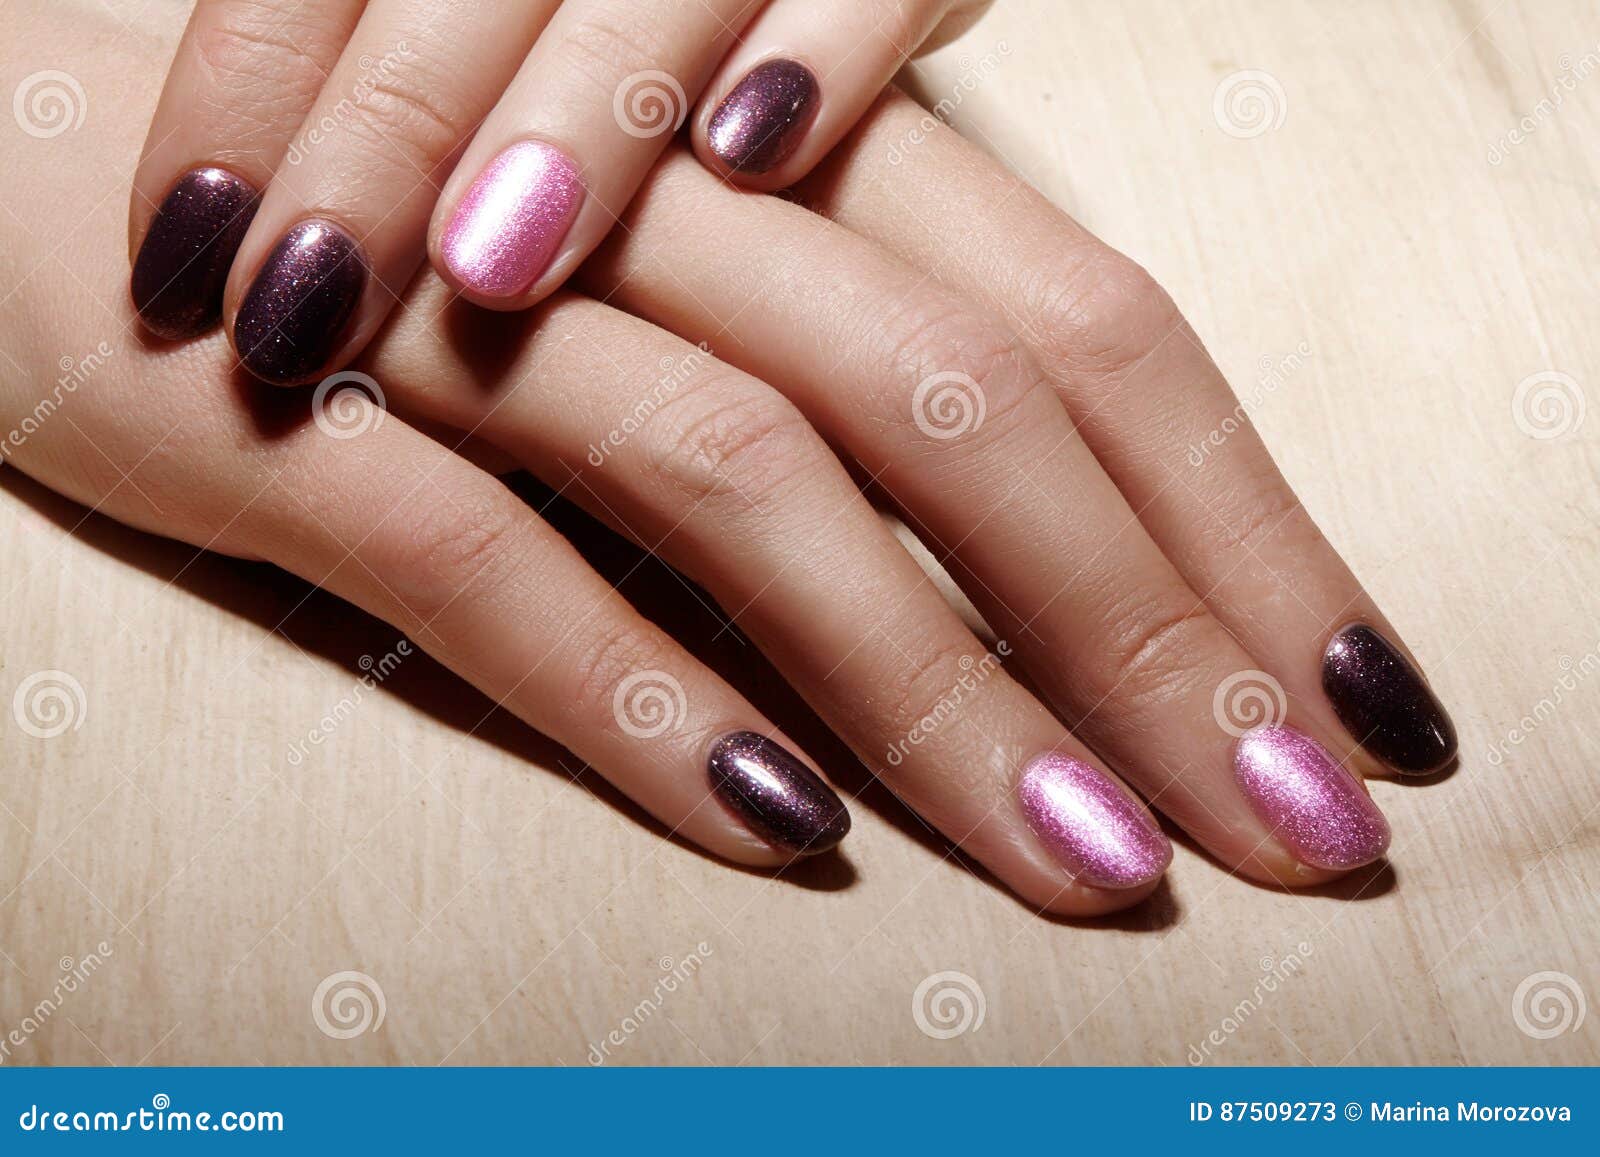 manicured nails with shiny nail polish. manicure with bright nailpolish. fashion art manicure with shiny gel lacquer